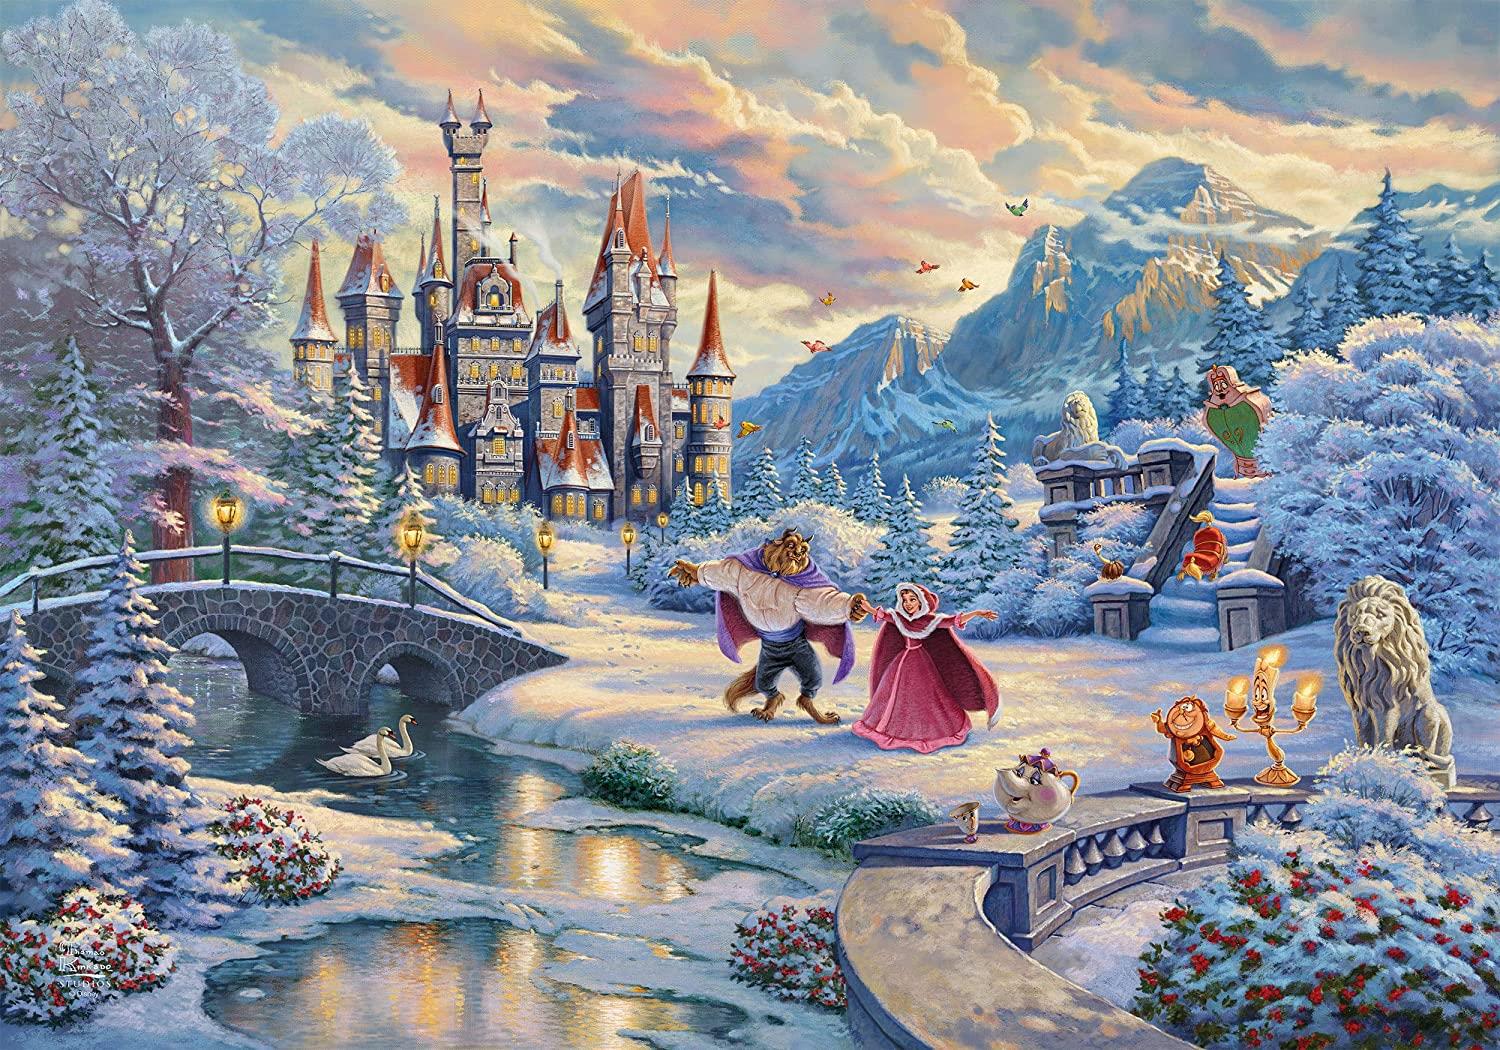 Schmidt Thomas Kinkade Disney Beauty & the Beast Winter Enchantment Jigsaw Puzzle (1000 Pieces)�